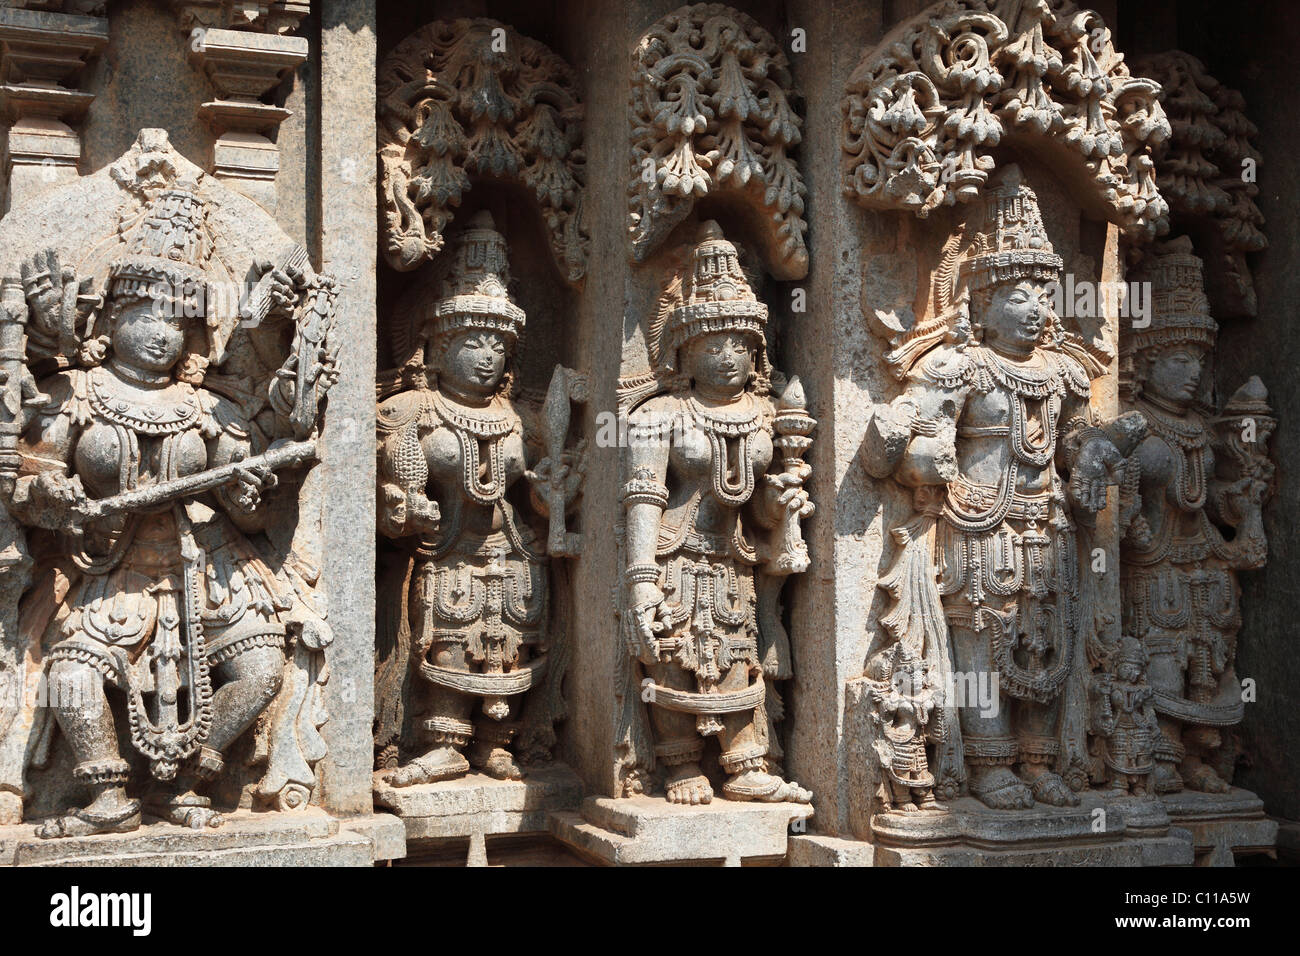 Images of deities on the wall of Kesava Temple, Keshava Temple, Hoysala style, Somnathpur, Somanathapura, Karnataka, South India Stock Photo